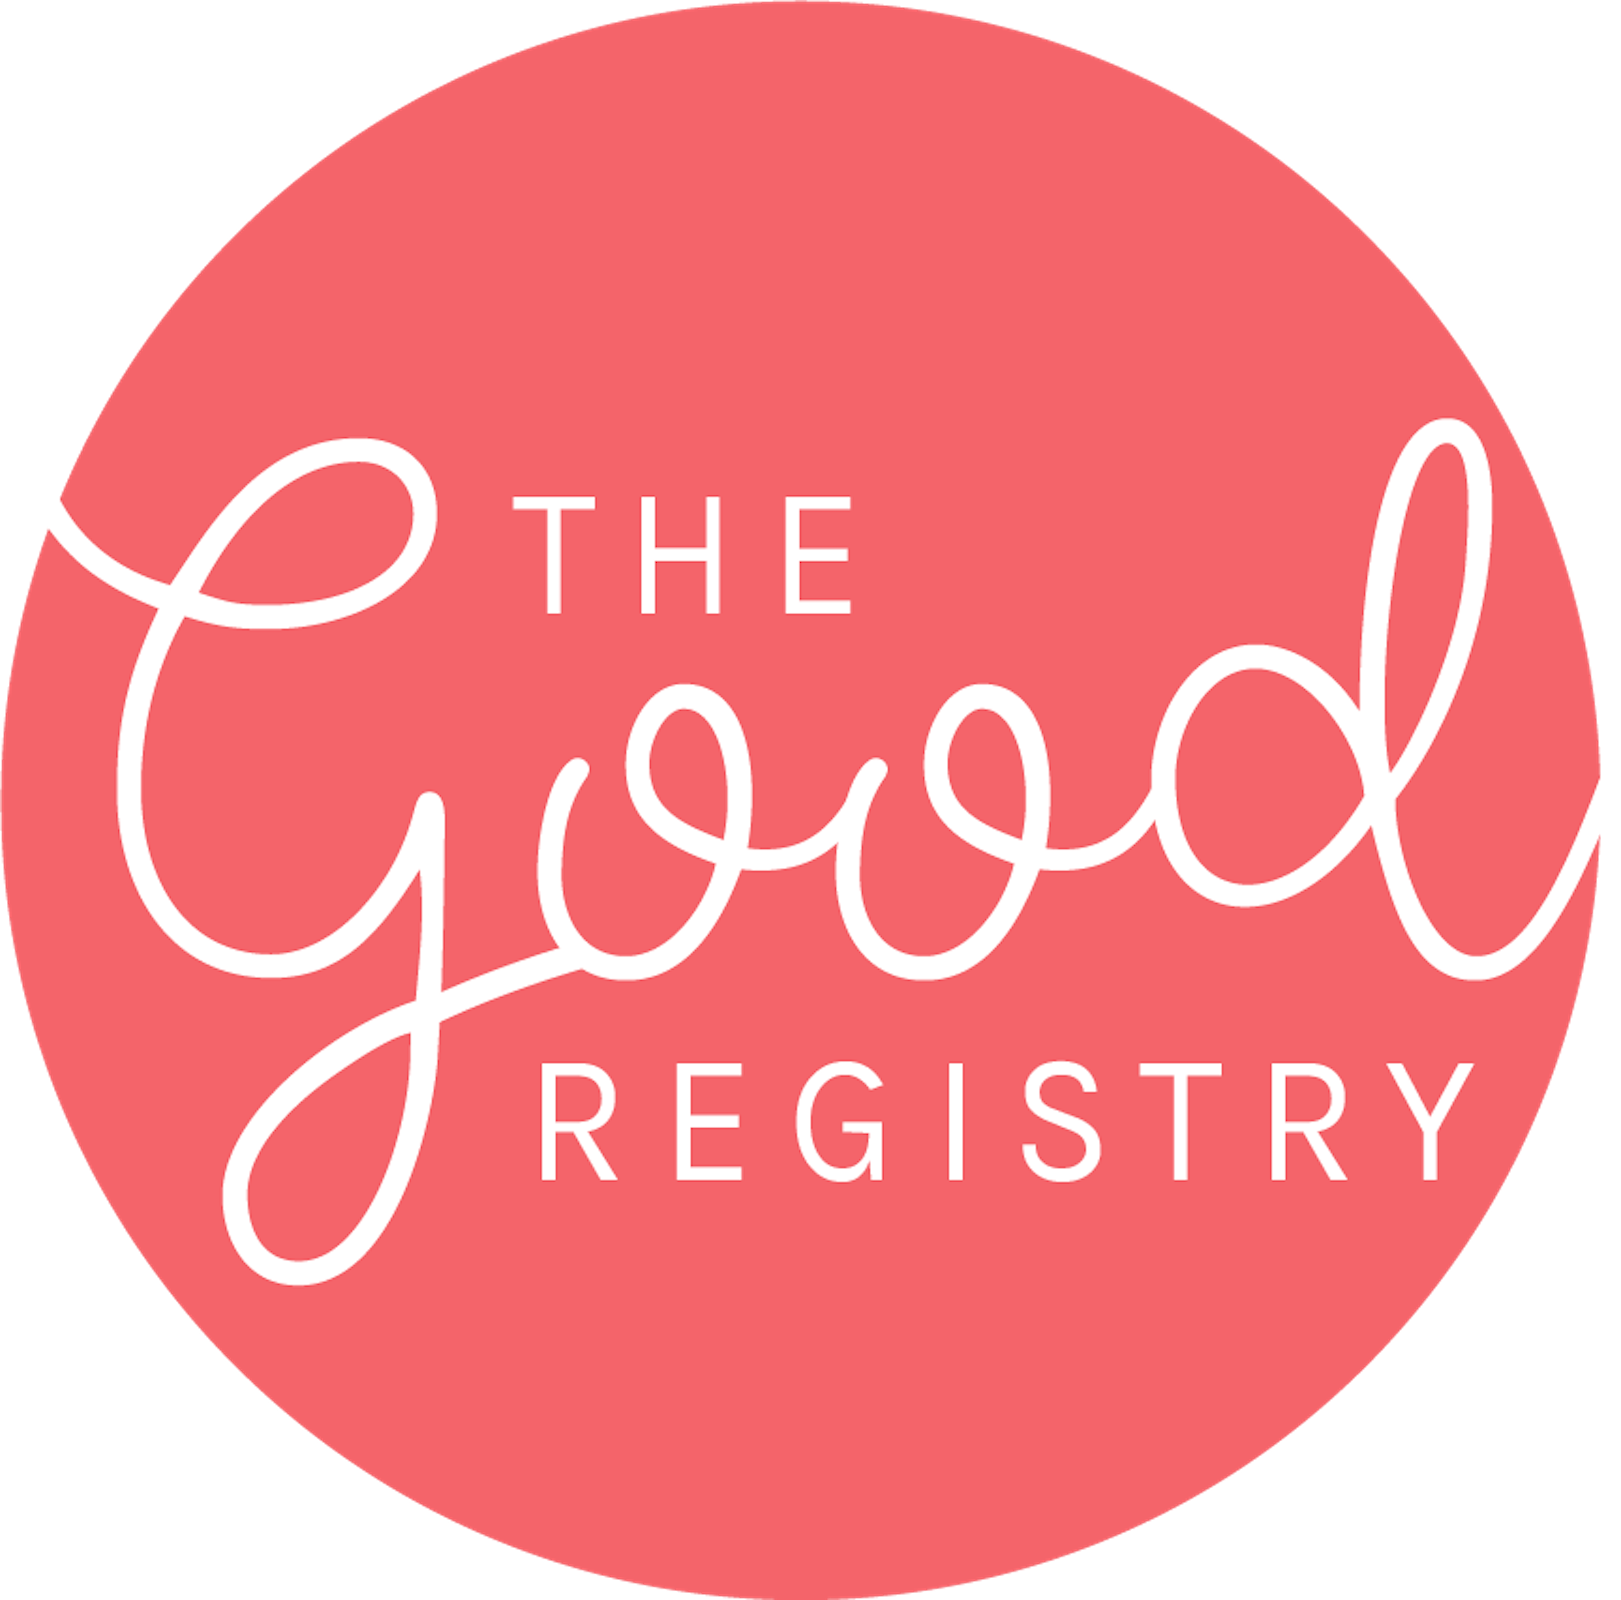 For your website - The Good Registry logo